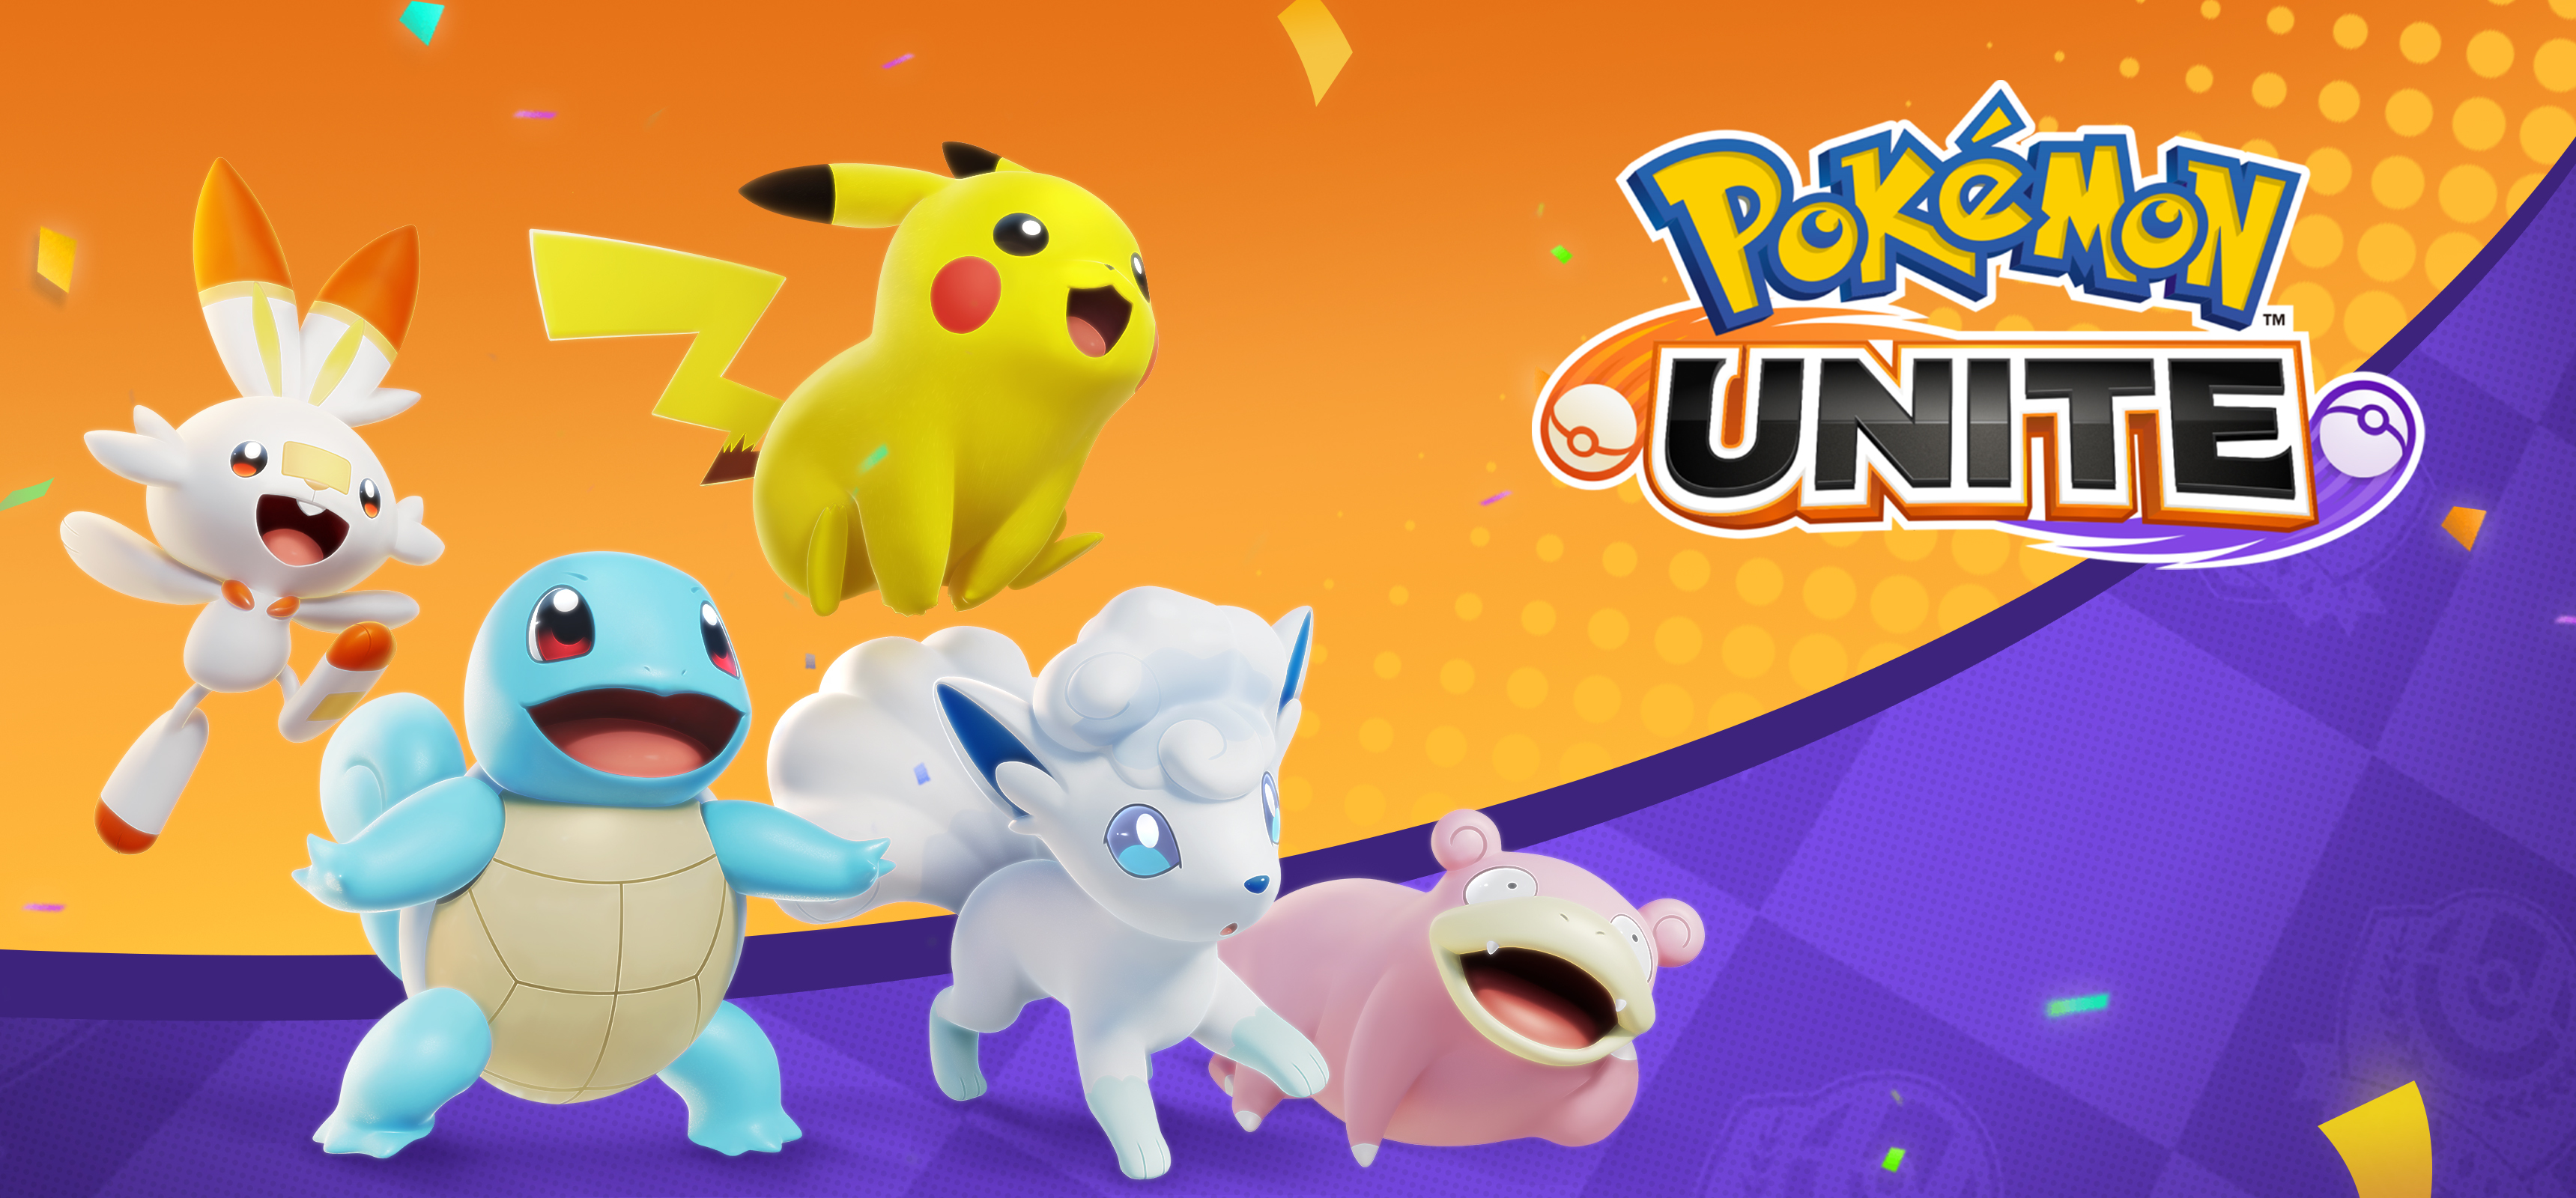 510167 descargar imagen videojuego, pokémon unite, pikachu, pokémon: fondos de pantalla y protectores de pantalla gratis